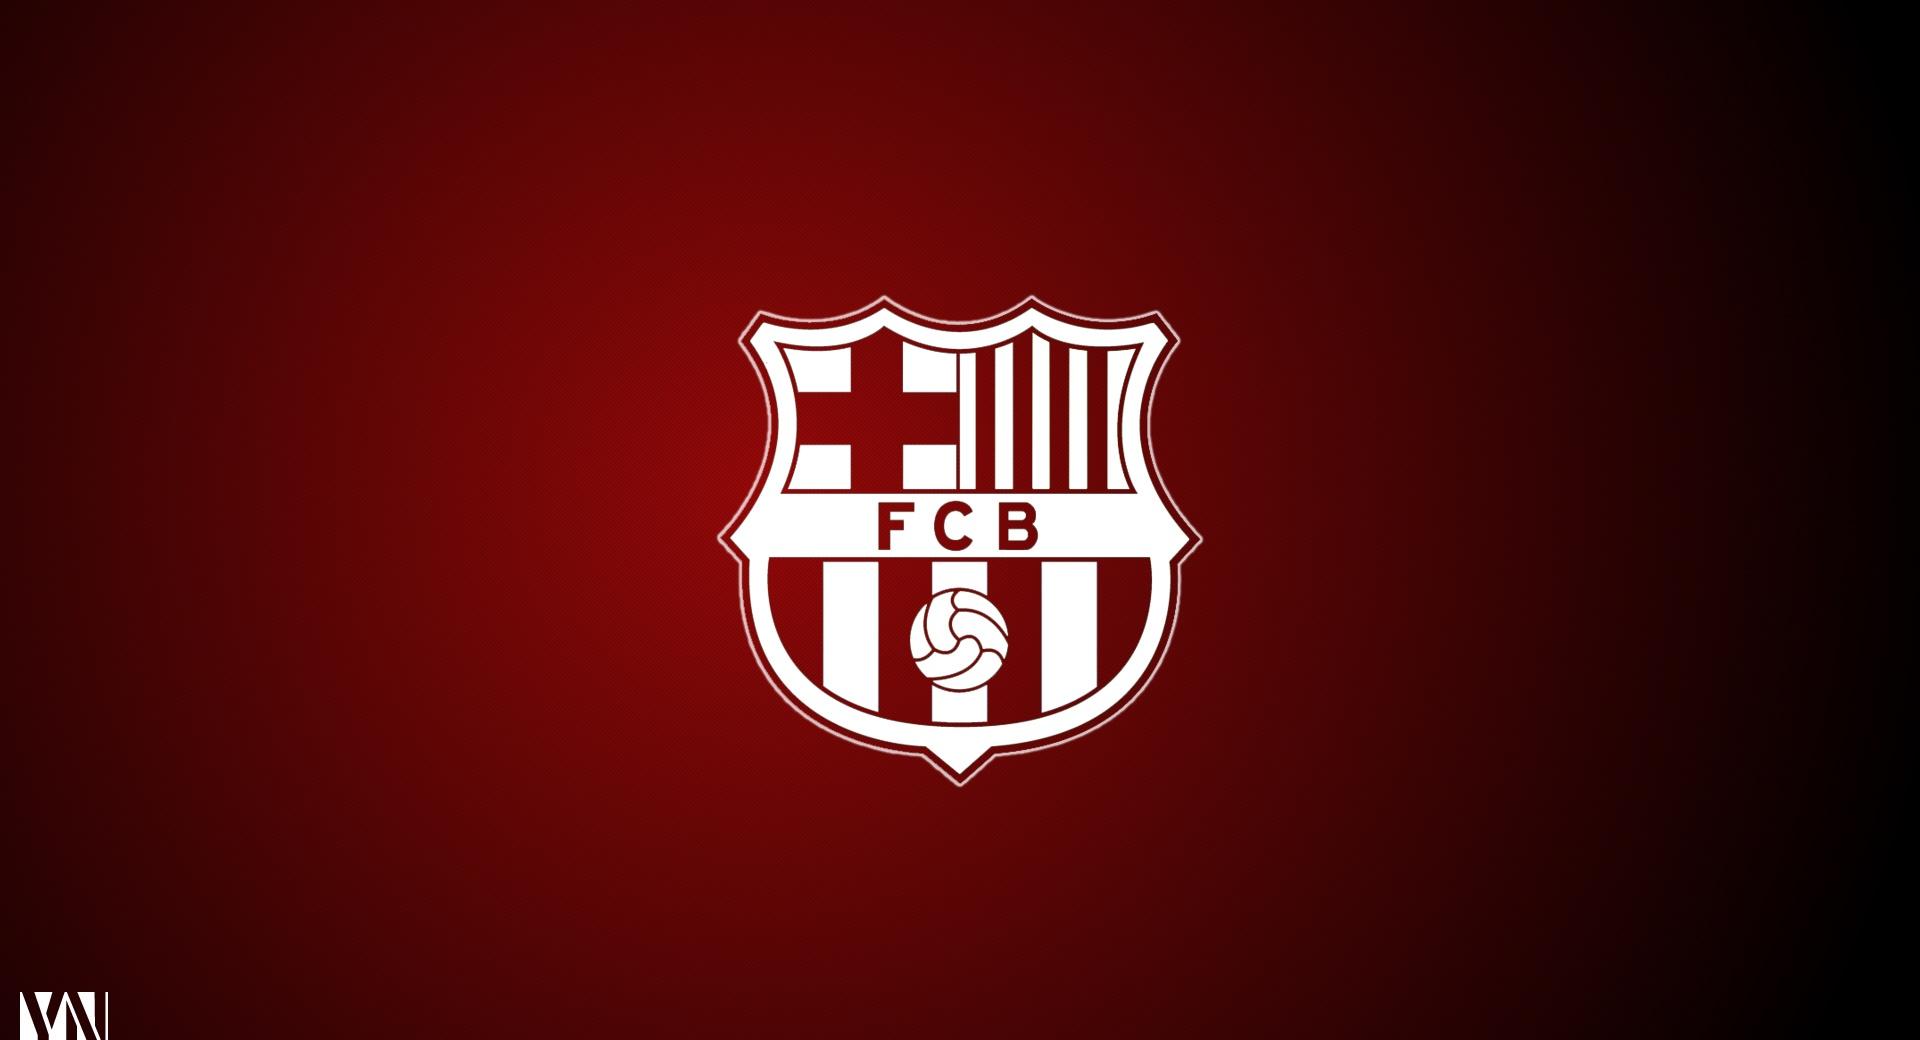 FC Barcelona by Yakub Nihat at 2048 x 2048 iPad size wallpapers HD quality